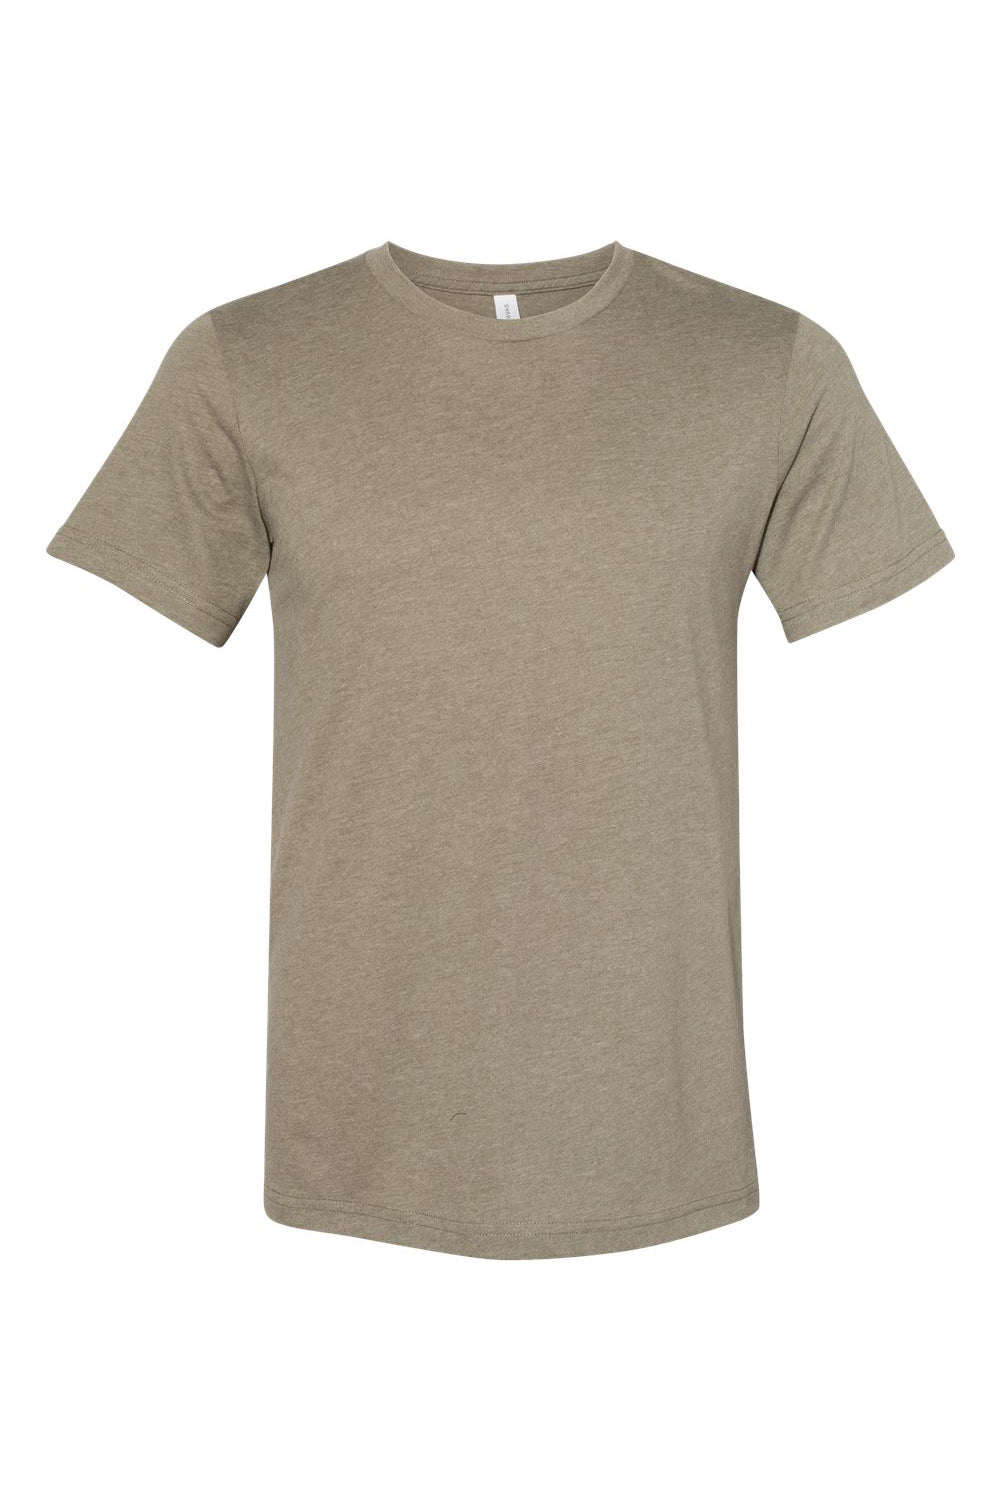 Bella + Canvas BC3301/3301C/3301 Mens Jersey Short Sleeve Crewneck T-Shirt Heather Olive Green Flat Front